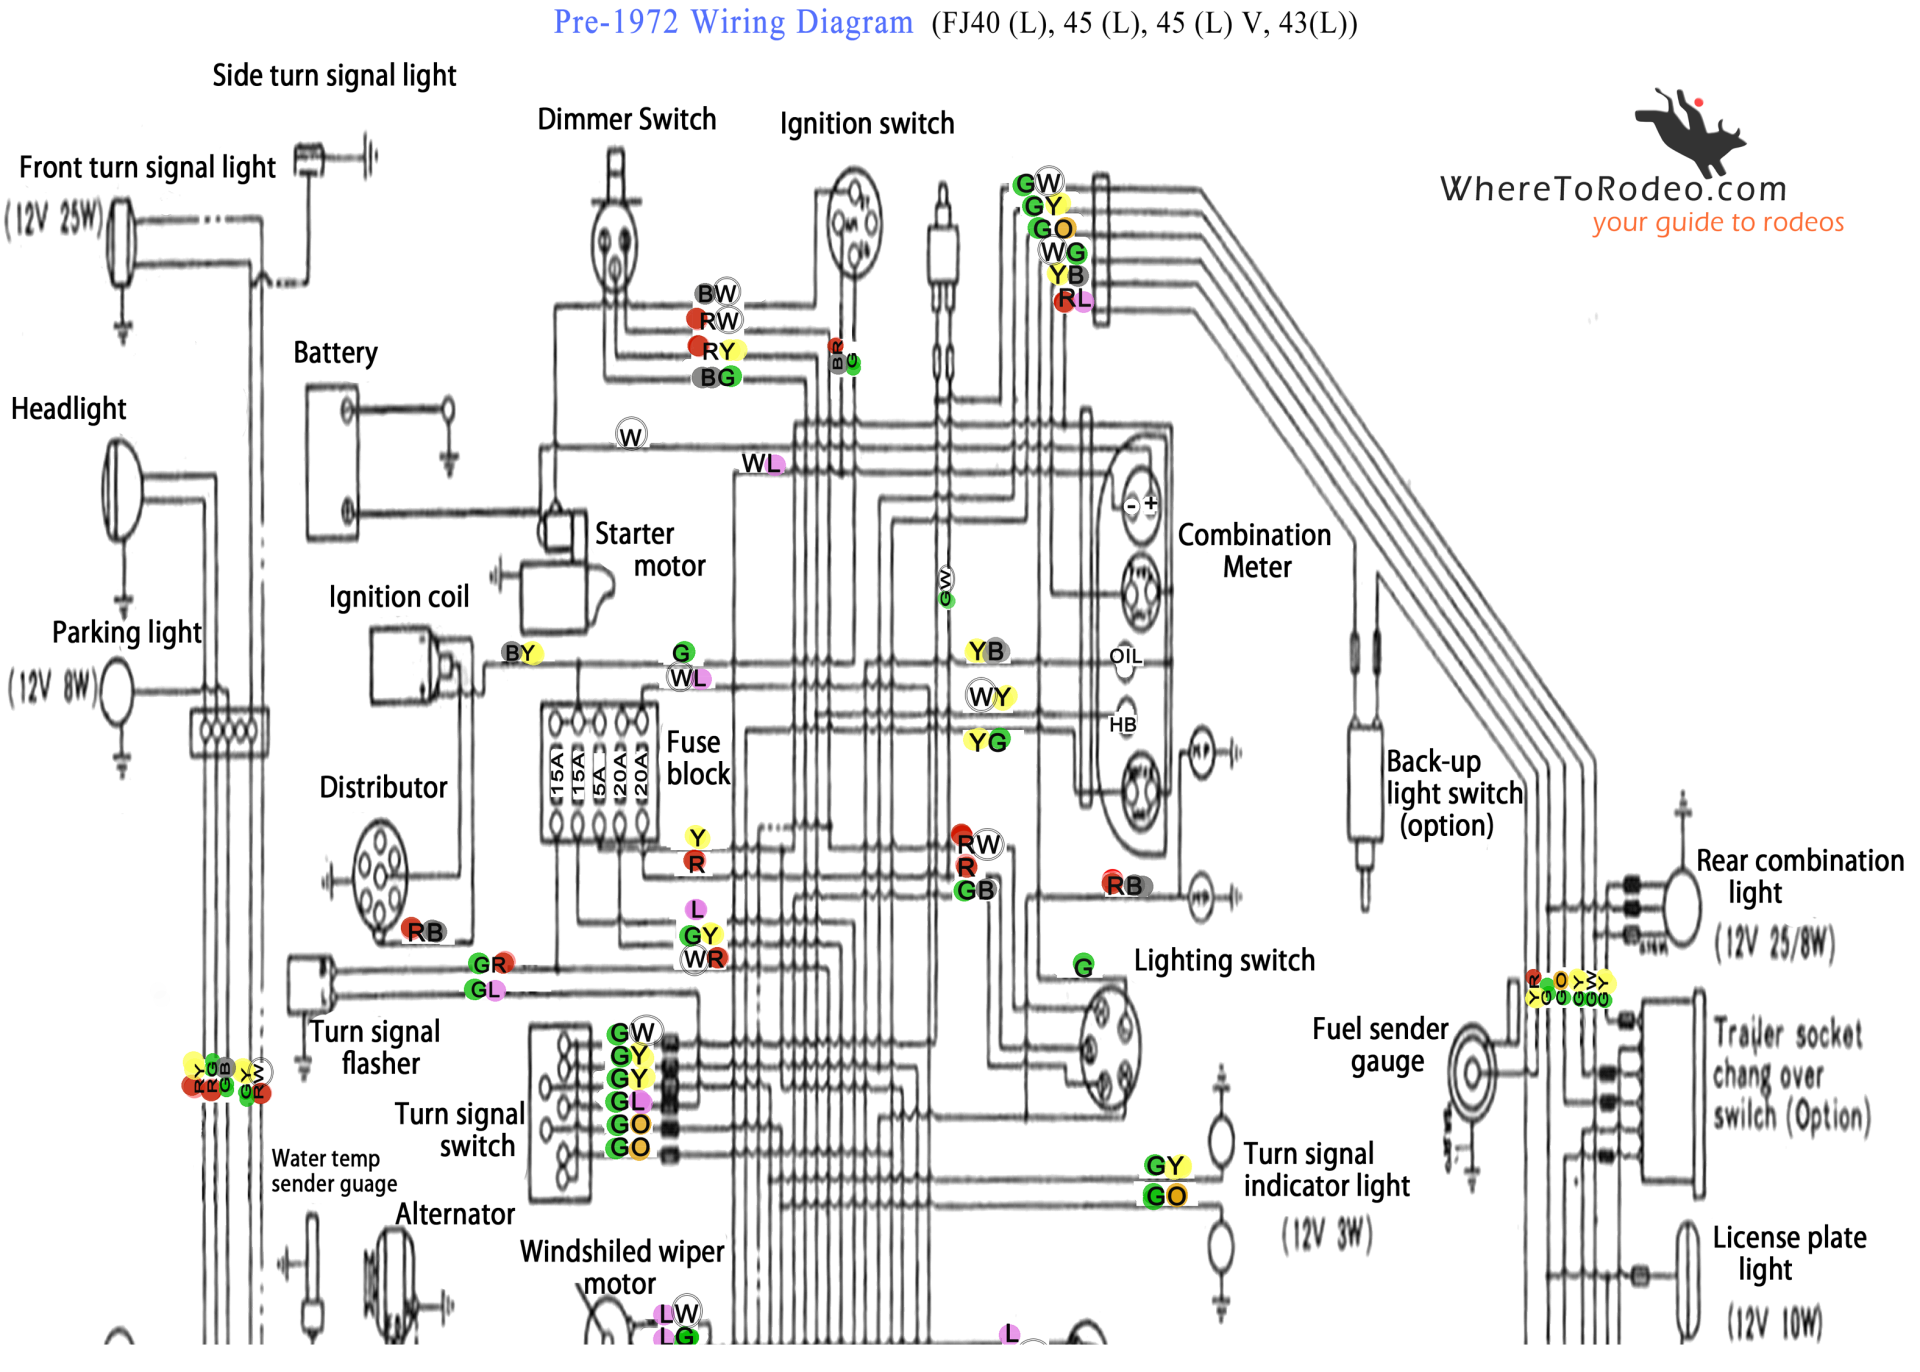 pre1972_FJ40_wiring_diagram1.png